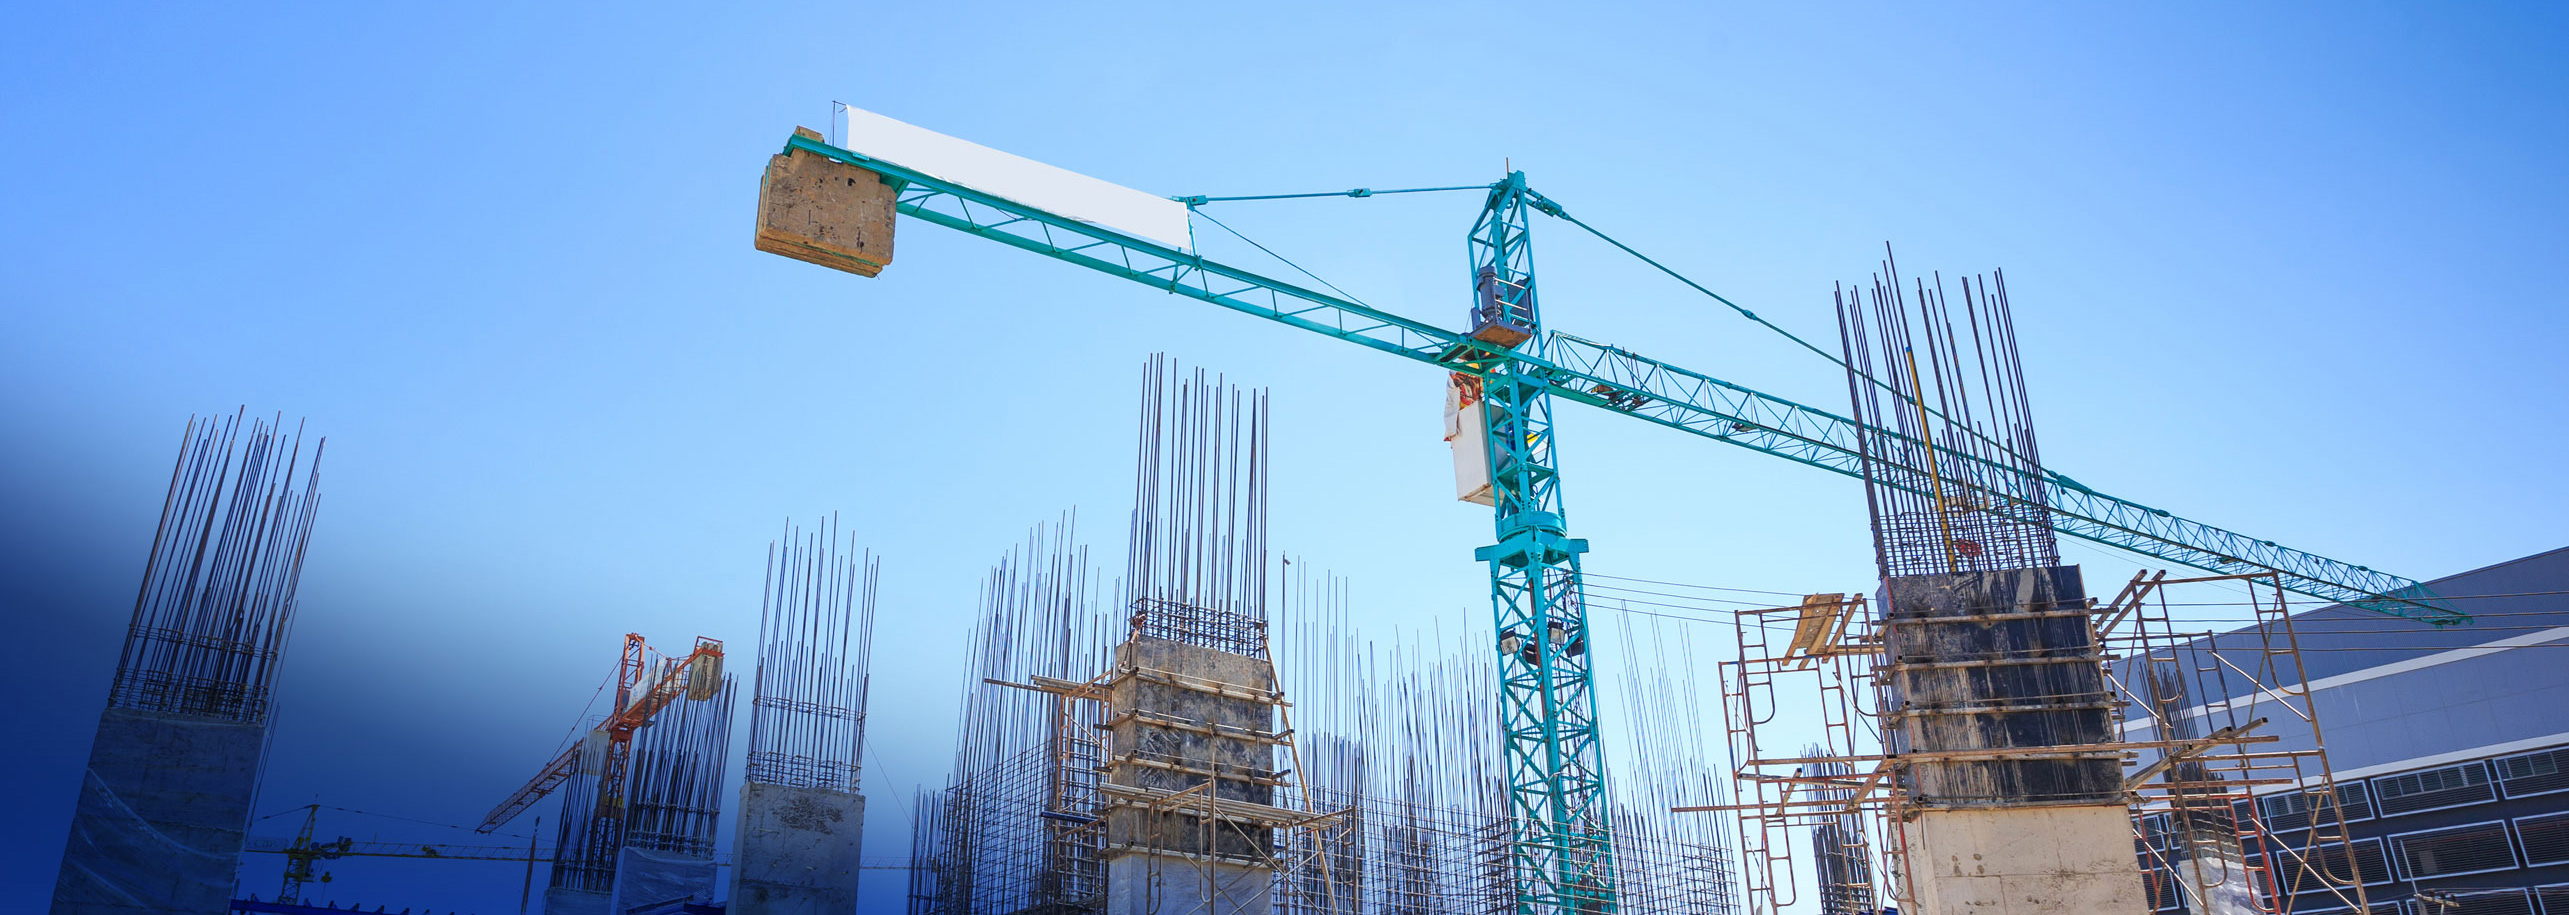 Blue tower crane on construction site